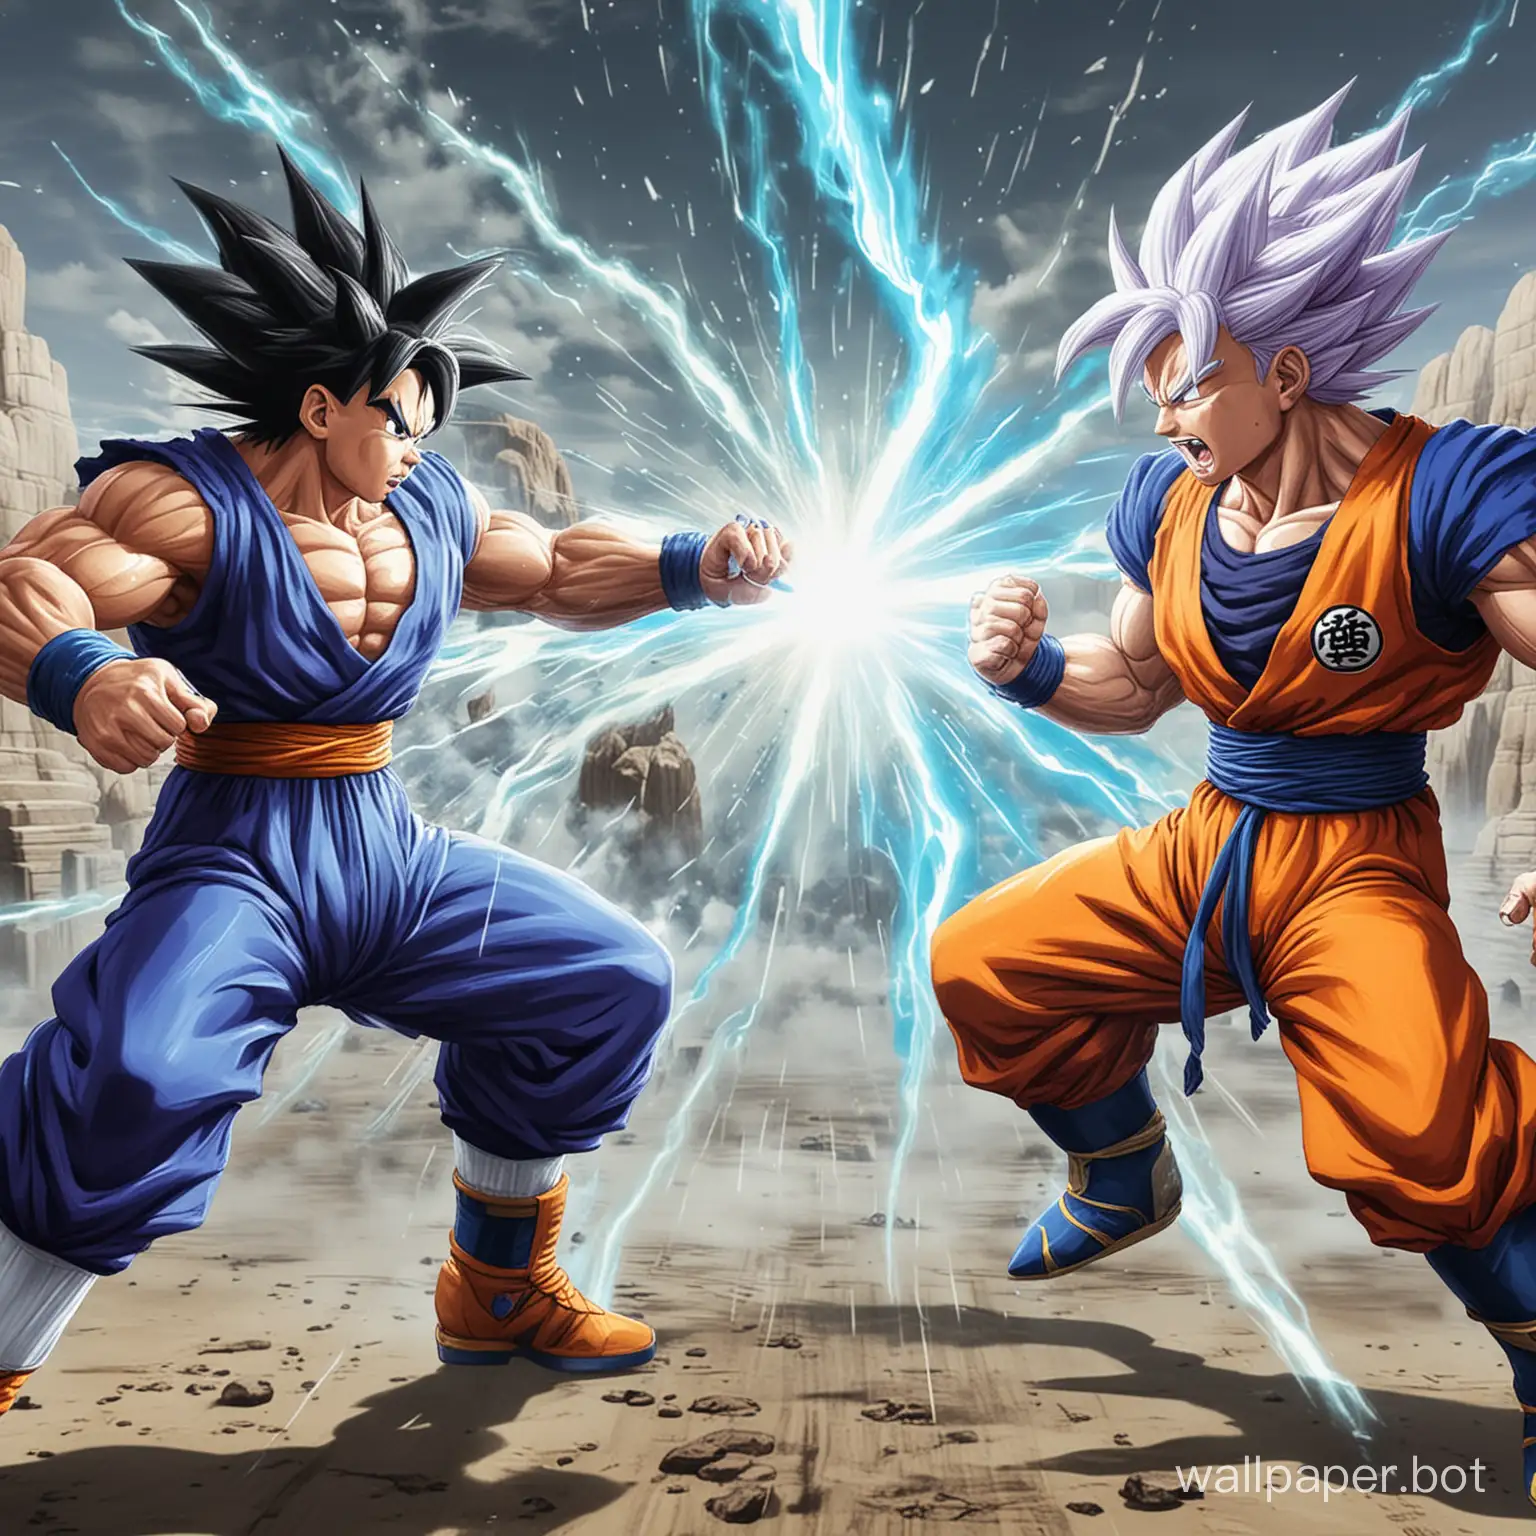 Epic-Battle-Goku-Confronts-Cooler-in-Intense-Showdown